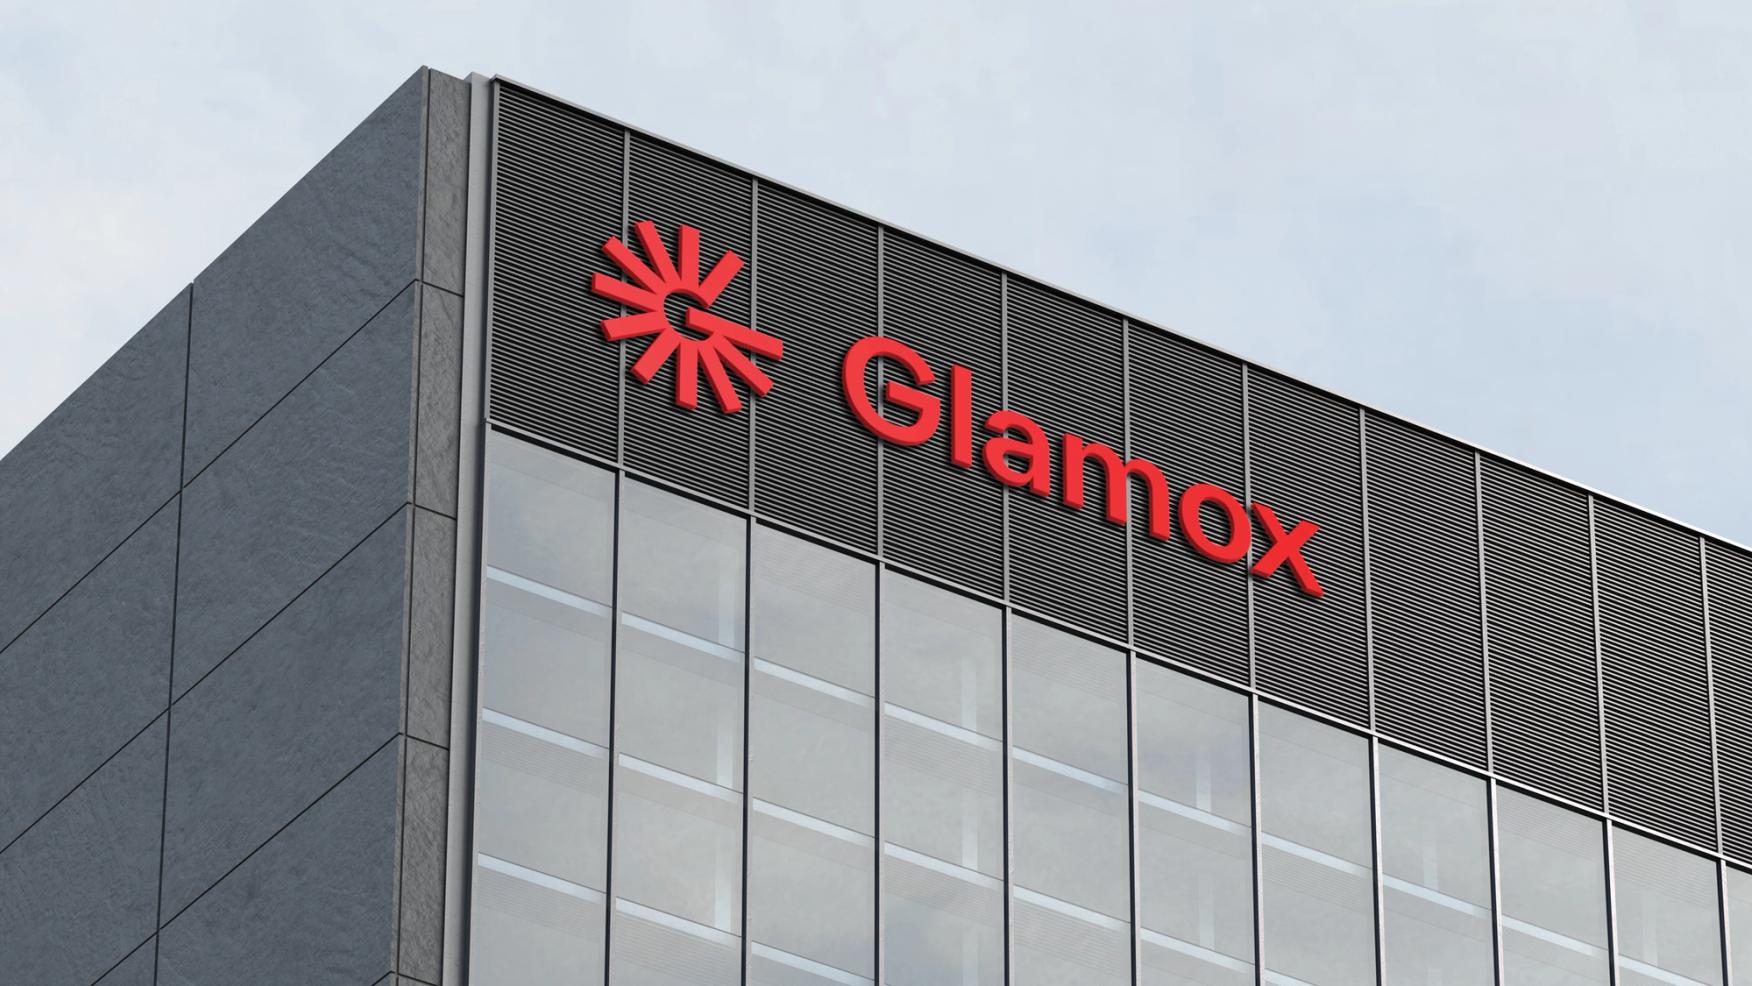 Glamox signage on a building